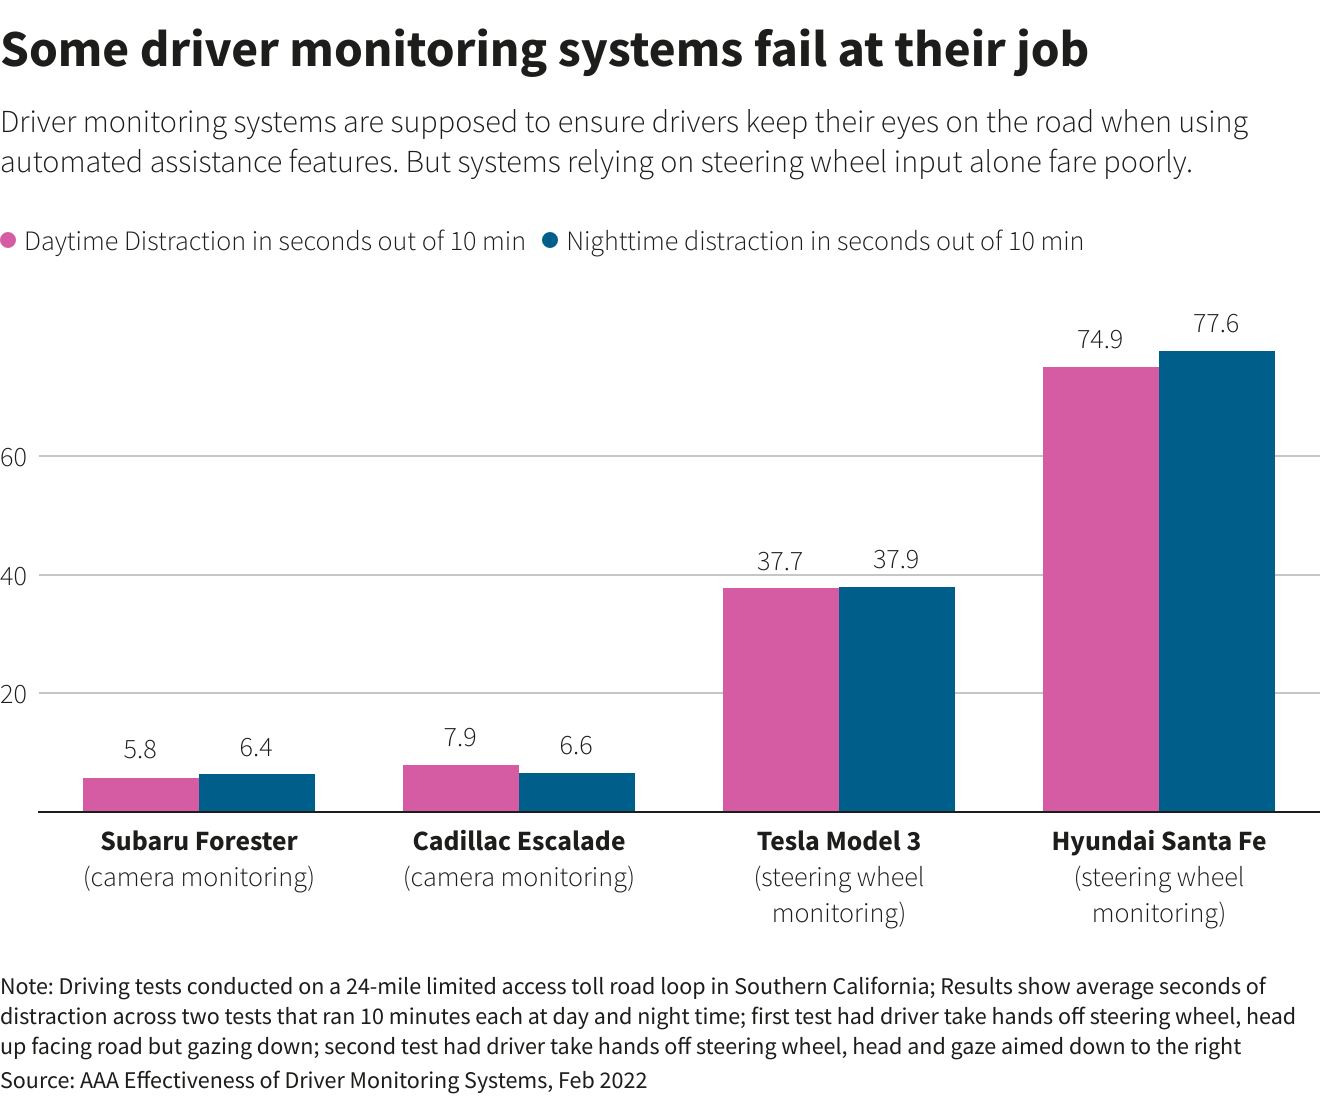 Some driver monitoring systems fail at their job